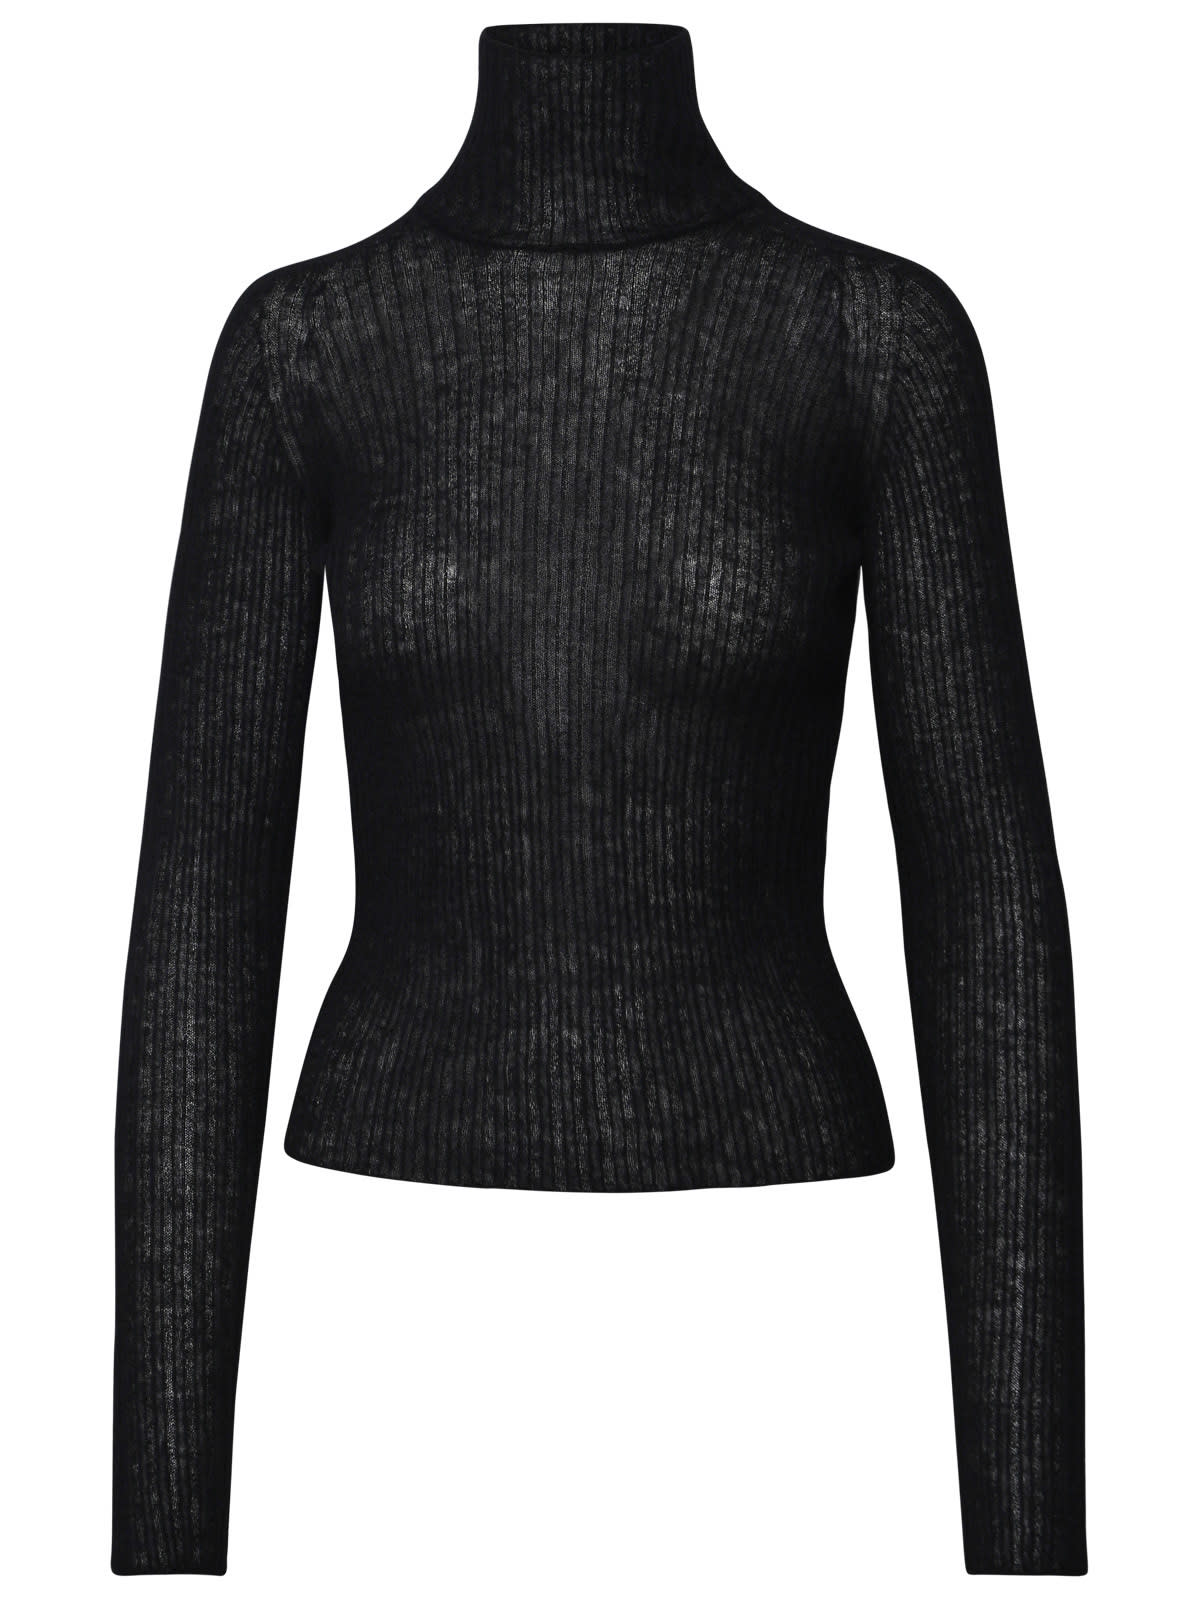 Saint Laurent Black Wool Blend Turtleneck Sweater